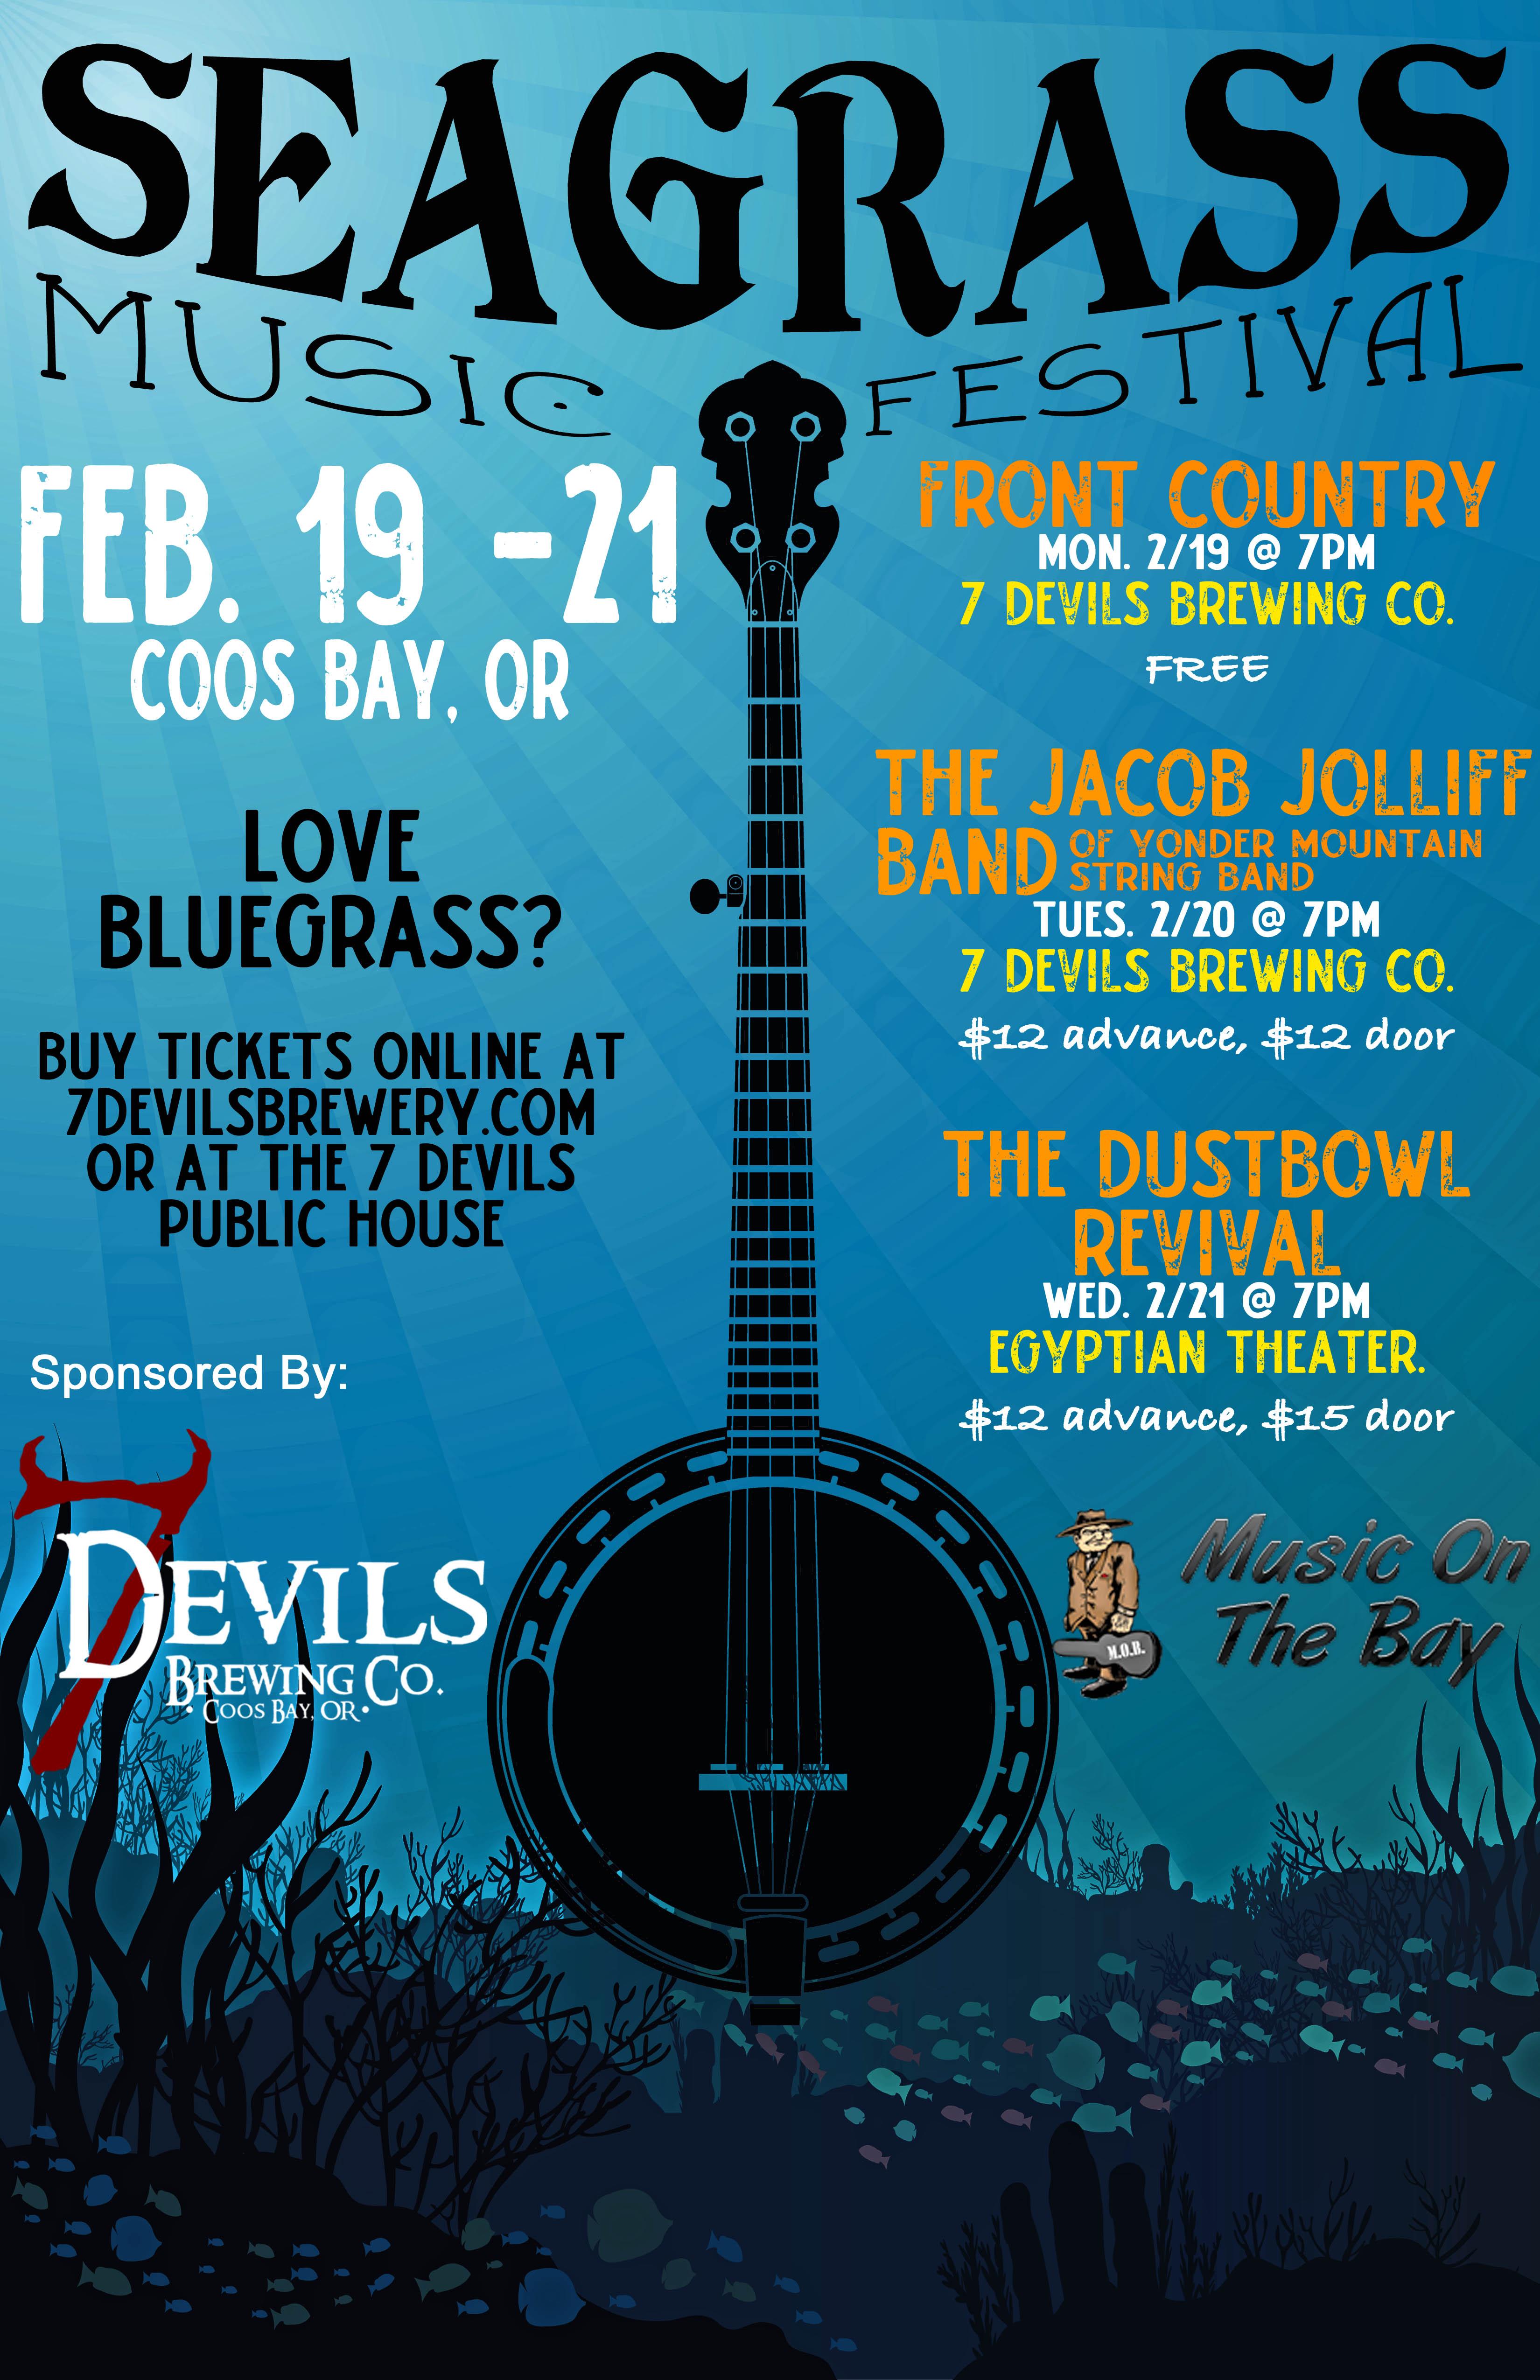 Seagrass Music Festival: Jacob Jolliff Band Private Show